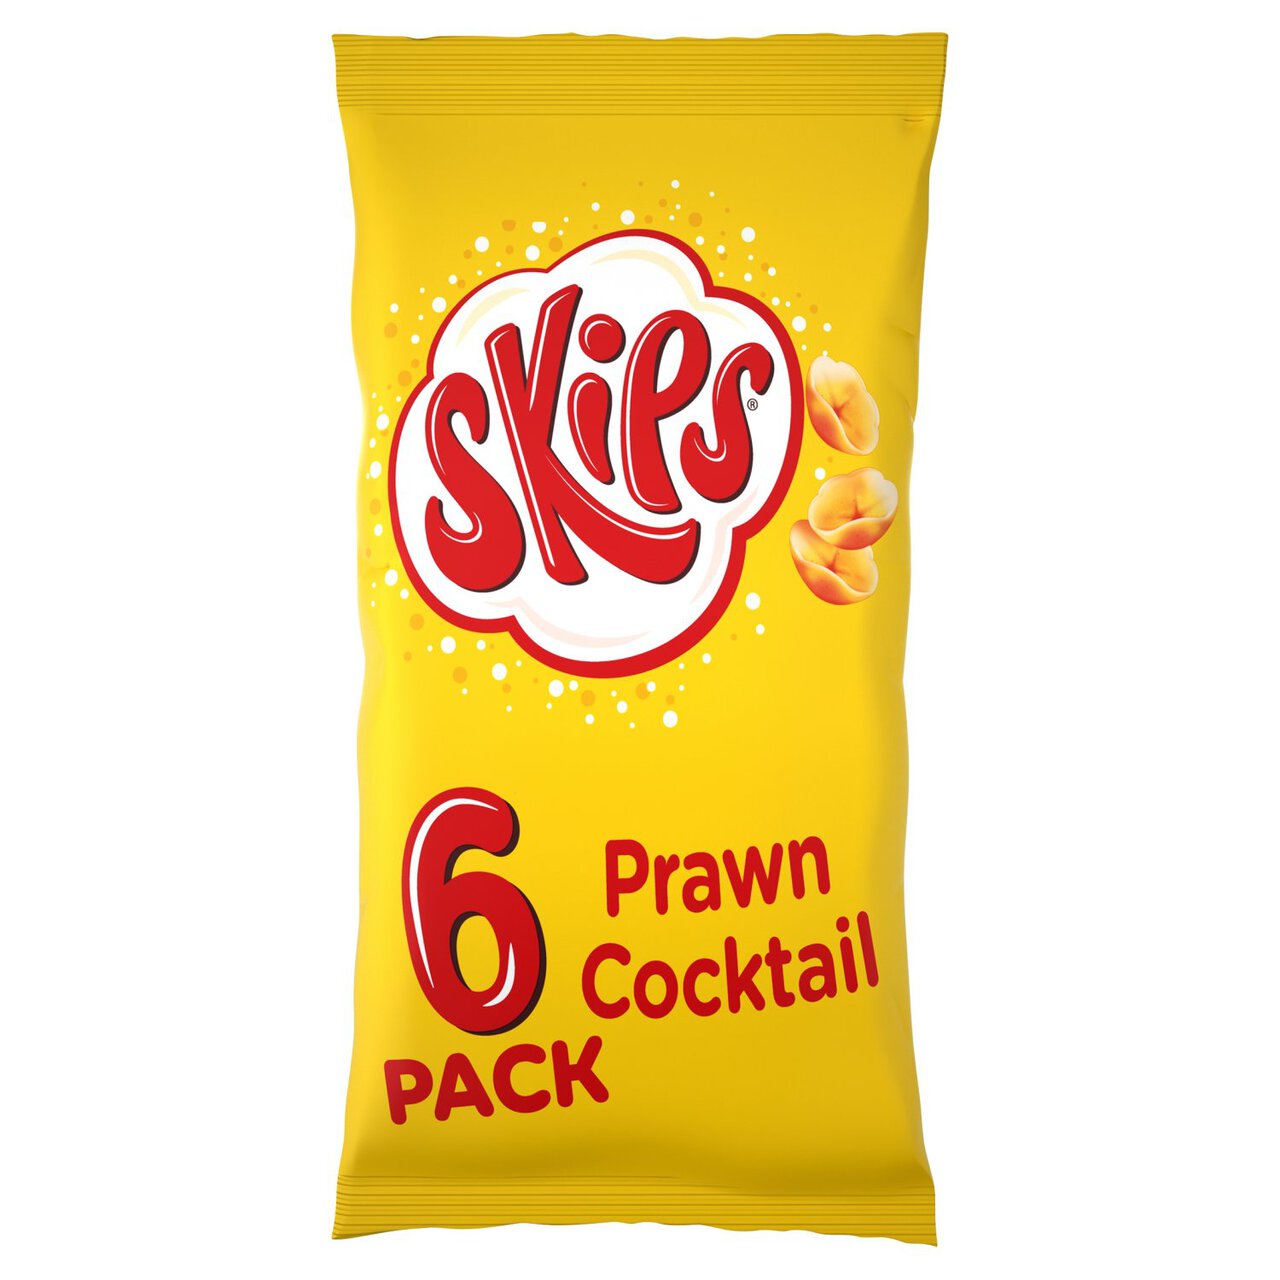 Skips Prawn Cocktail Multipack Crisps 6 per pack